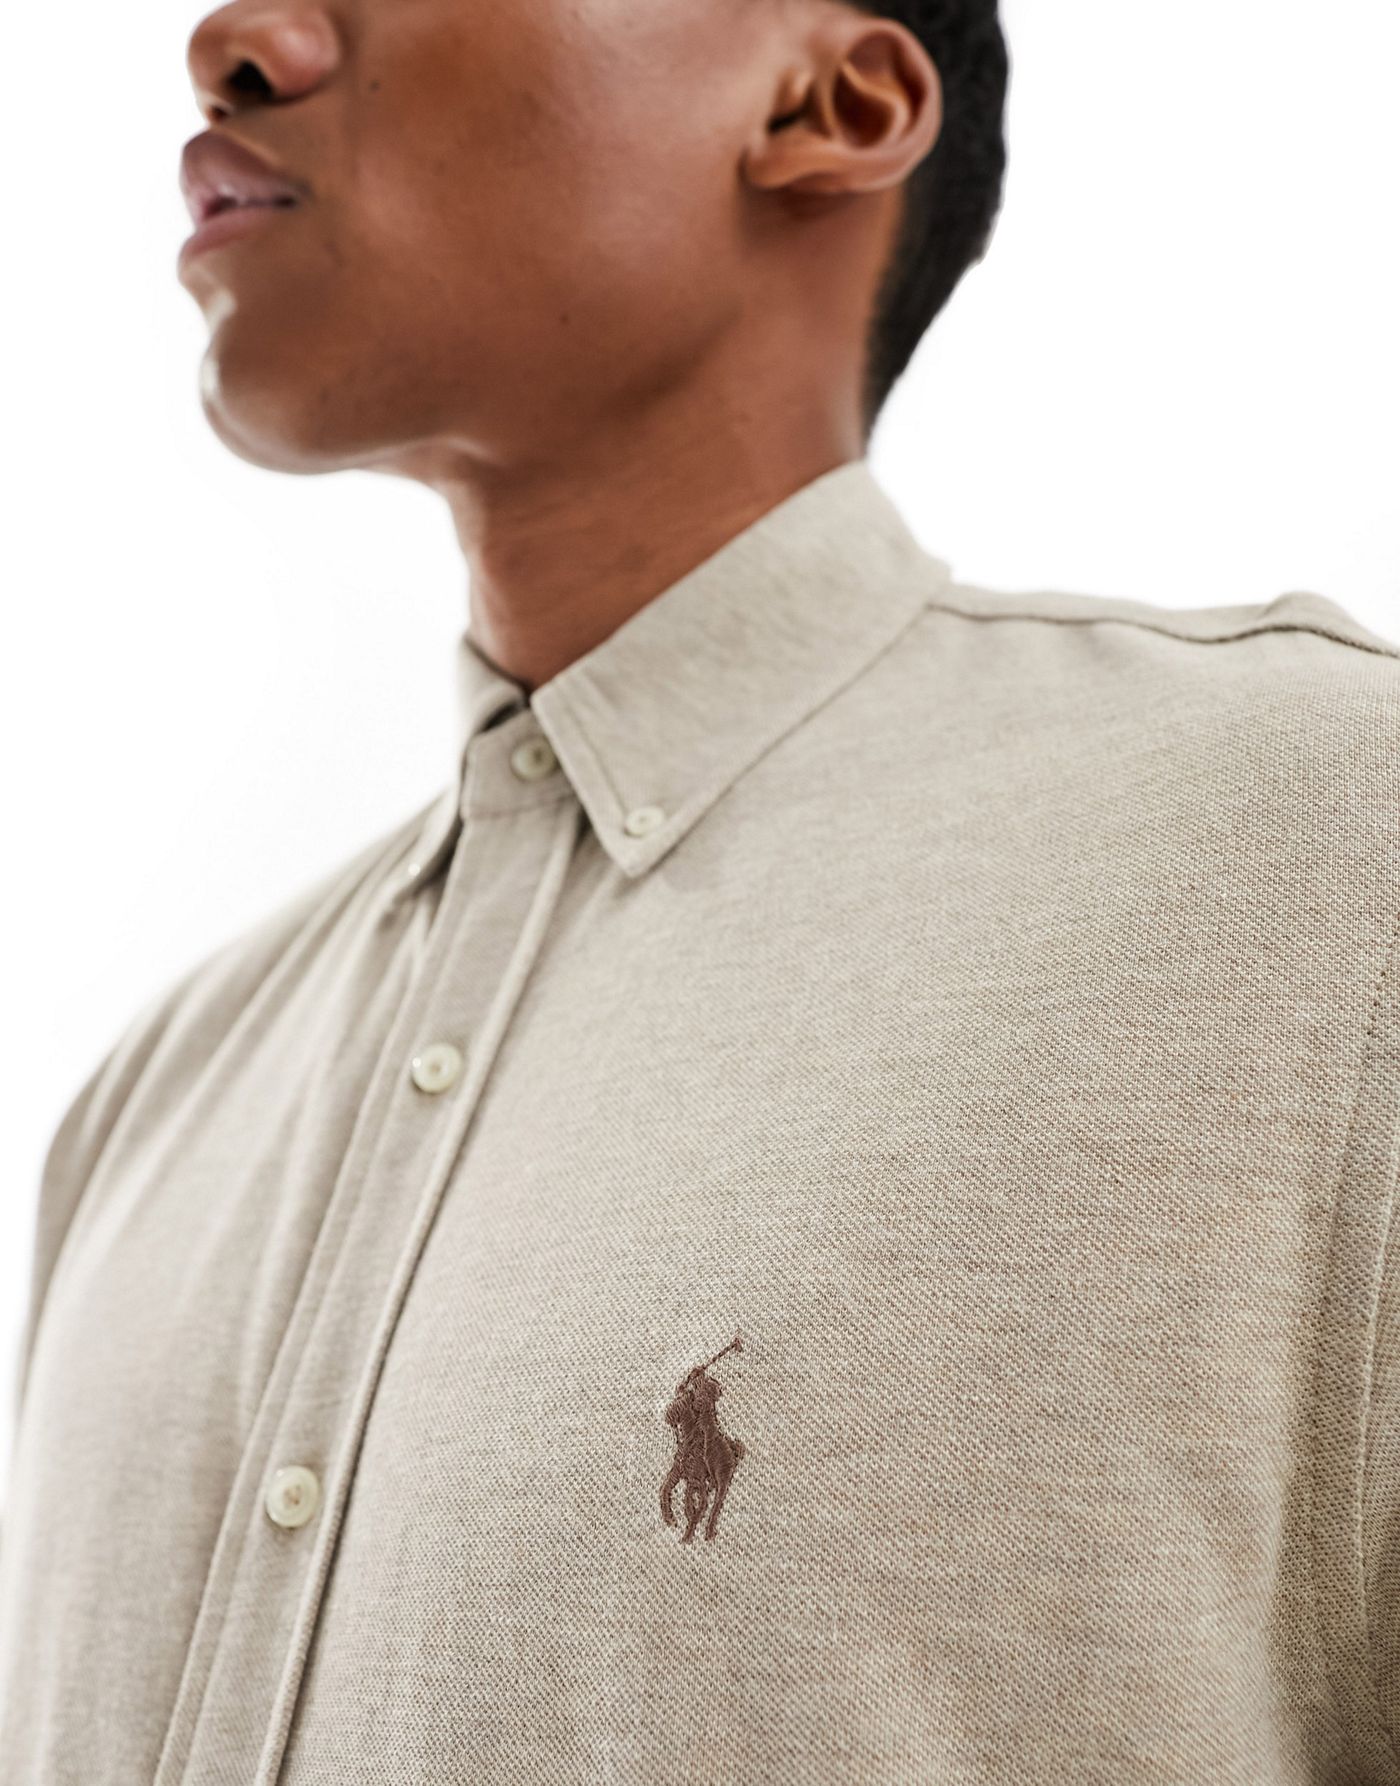 Polo Ralph Lauren icon logo button down pique shirt in beige marl